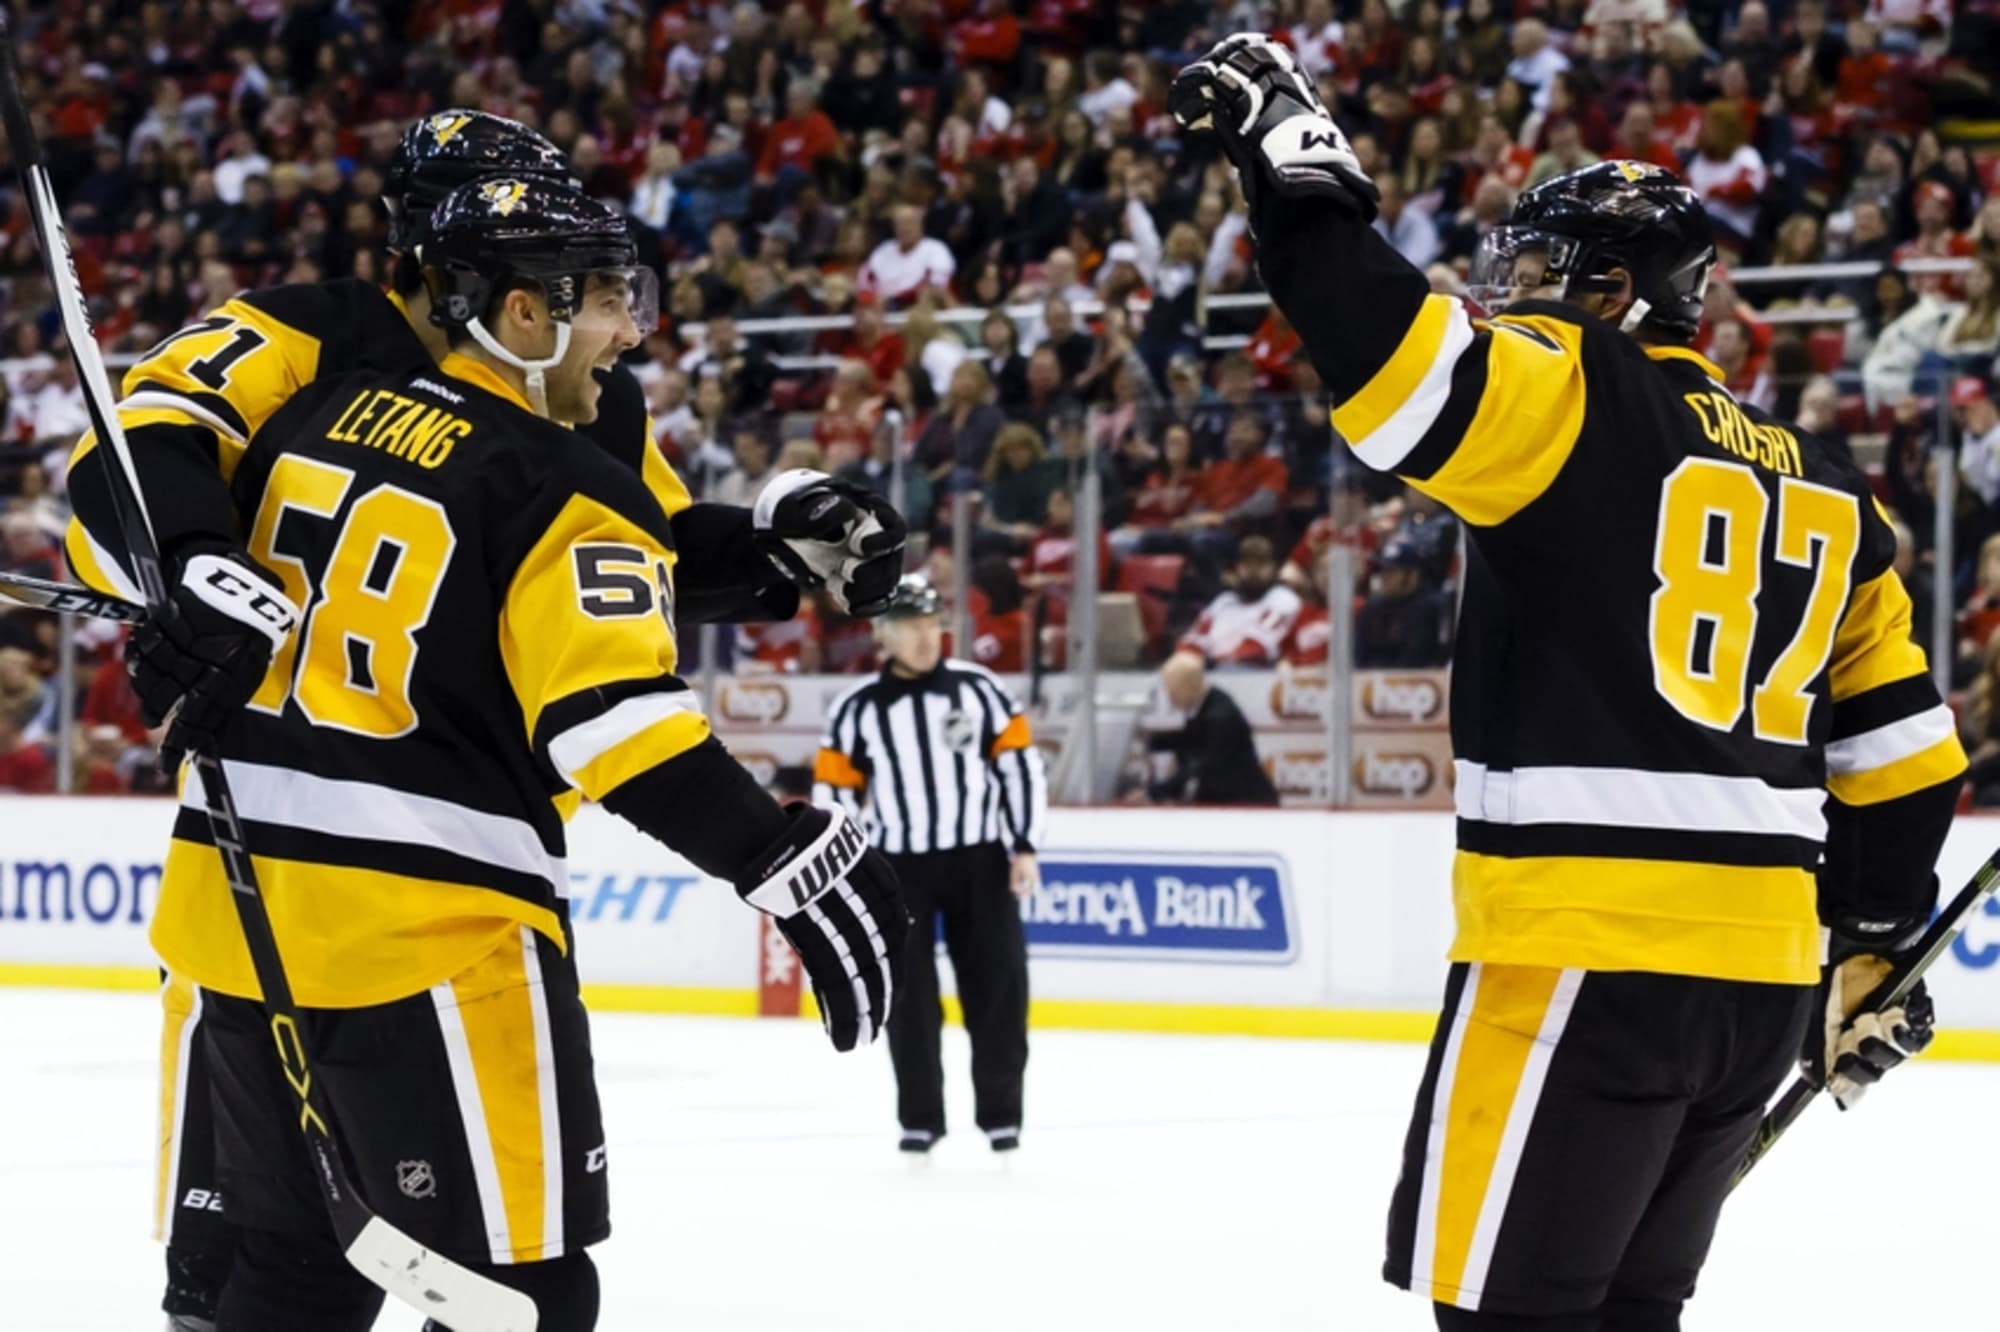 Red Wings vs. Penguins: Raymond Got A Crosby Jersey as a KidStill Has It  - Detroit Hockey Now